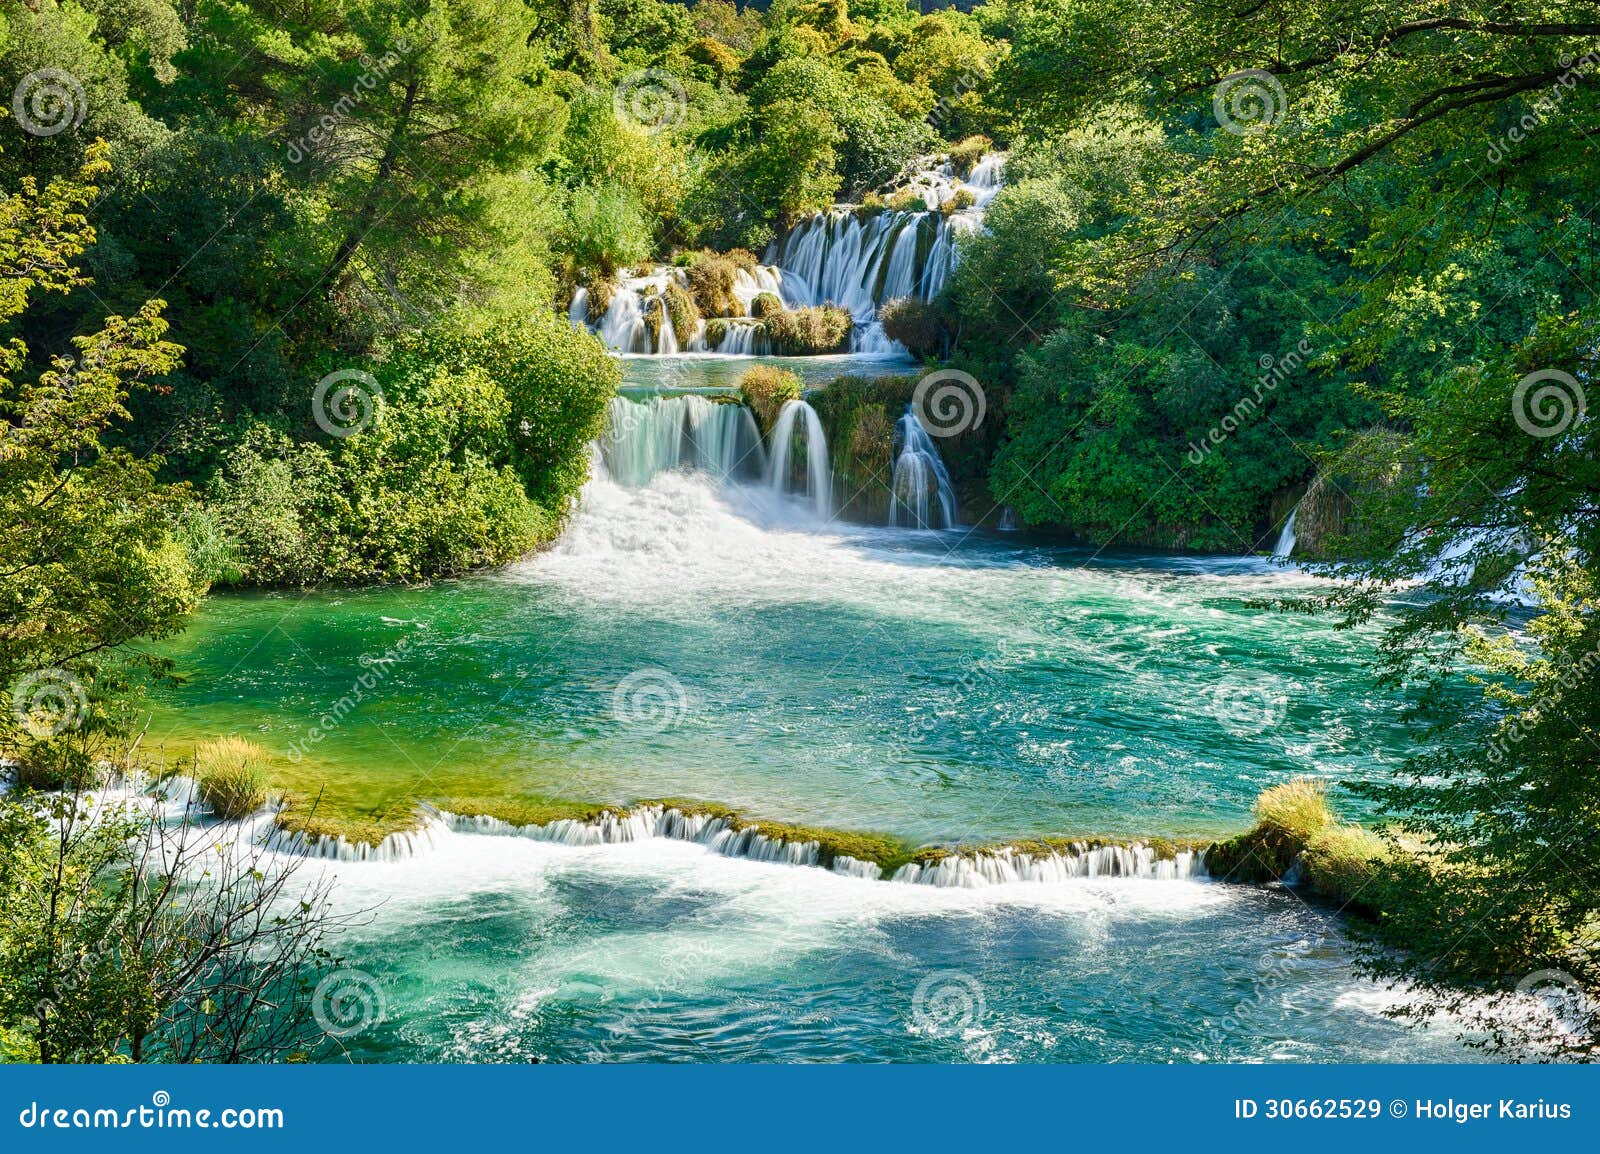 krka waterfalls (krka national park, croatia)